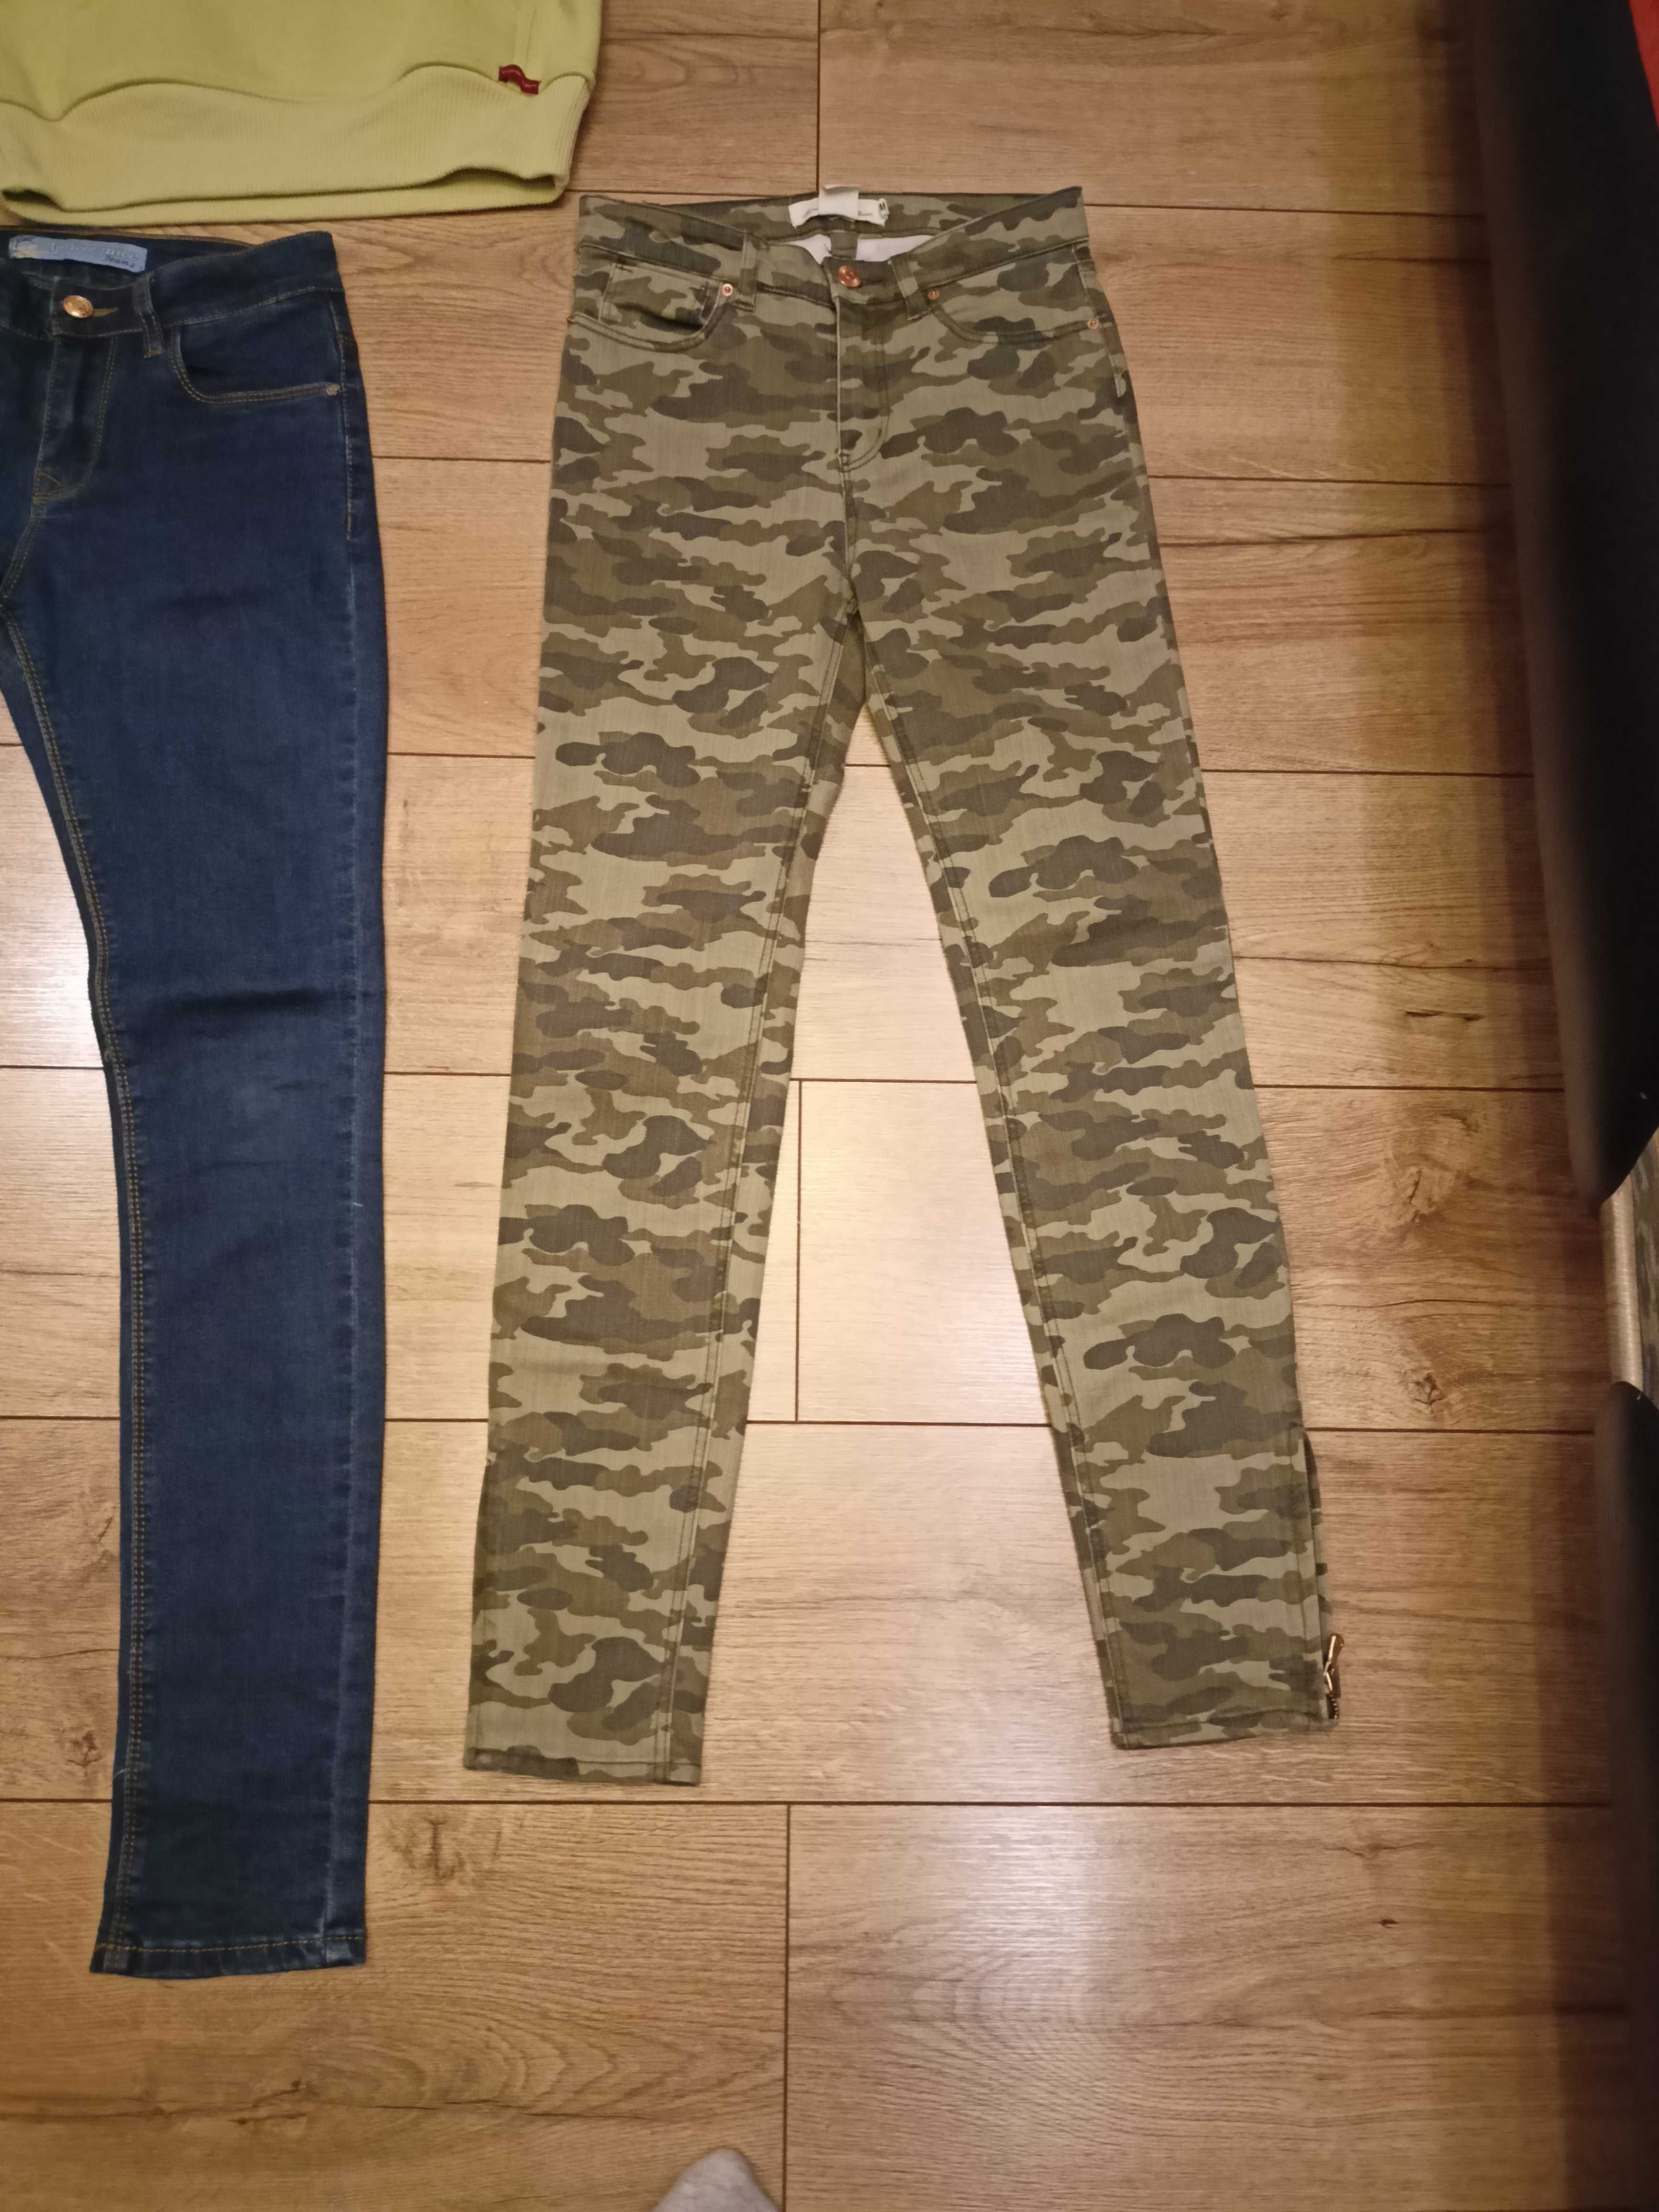 Spodnie i bluza rozmiar 160-164